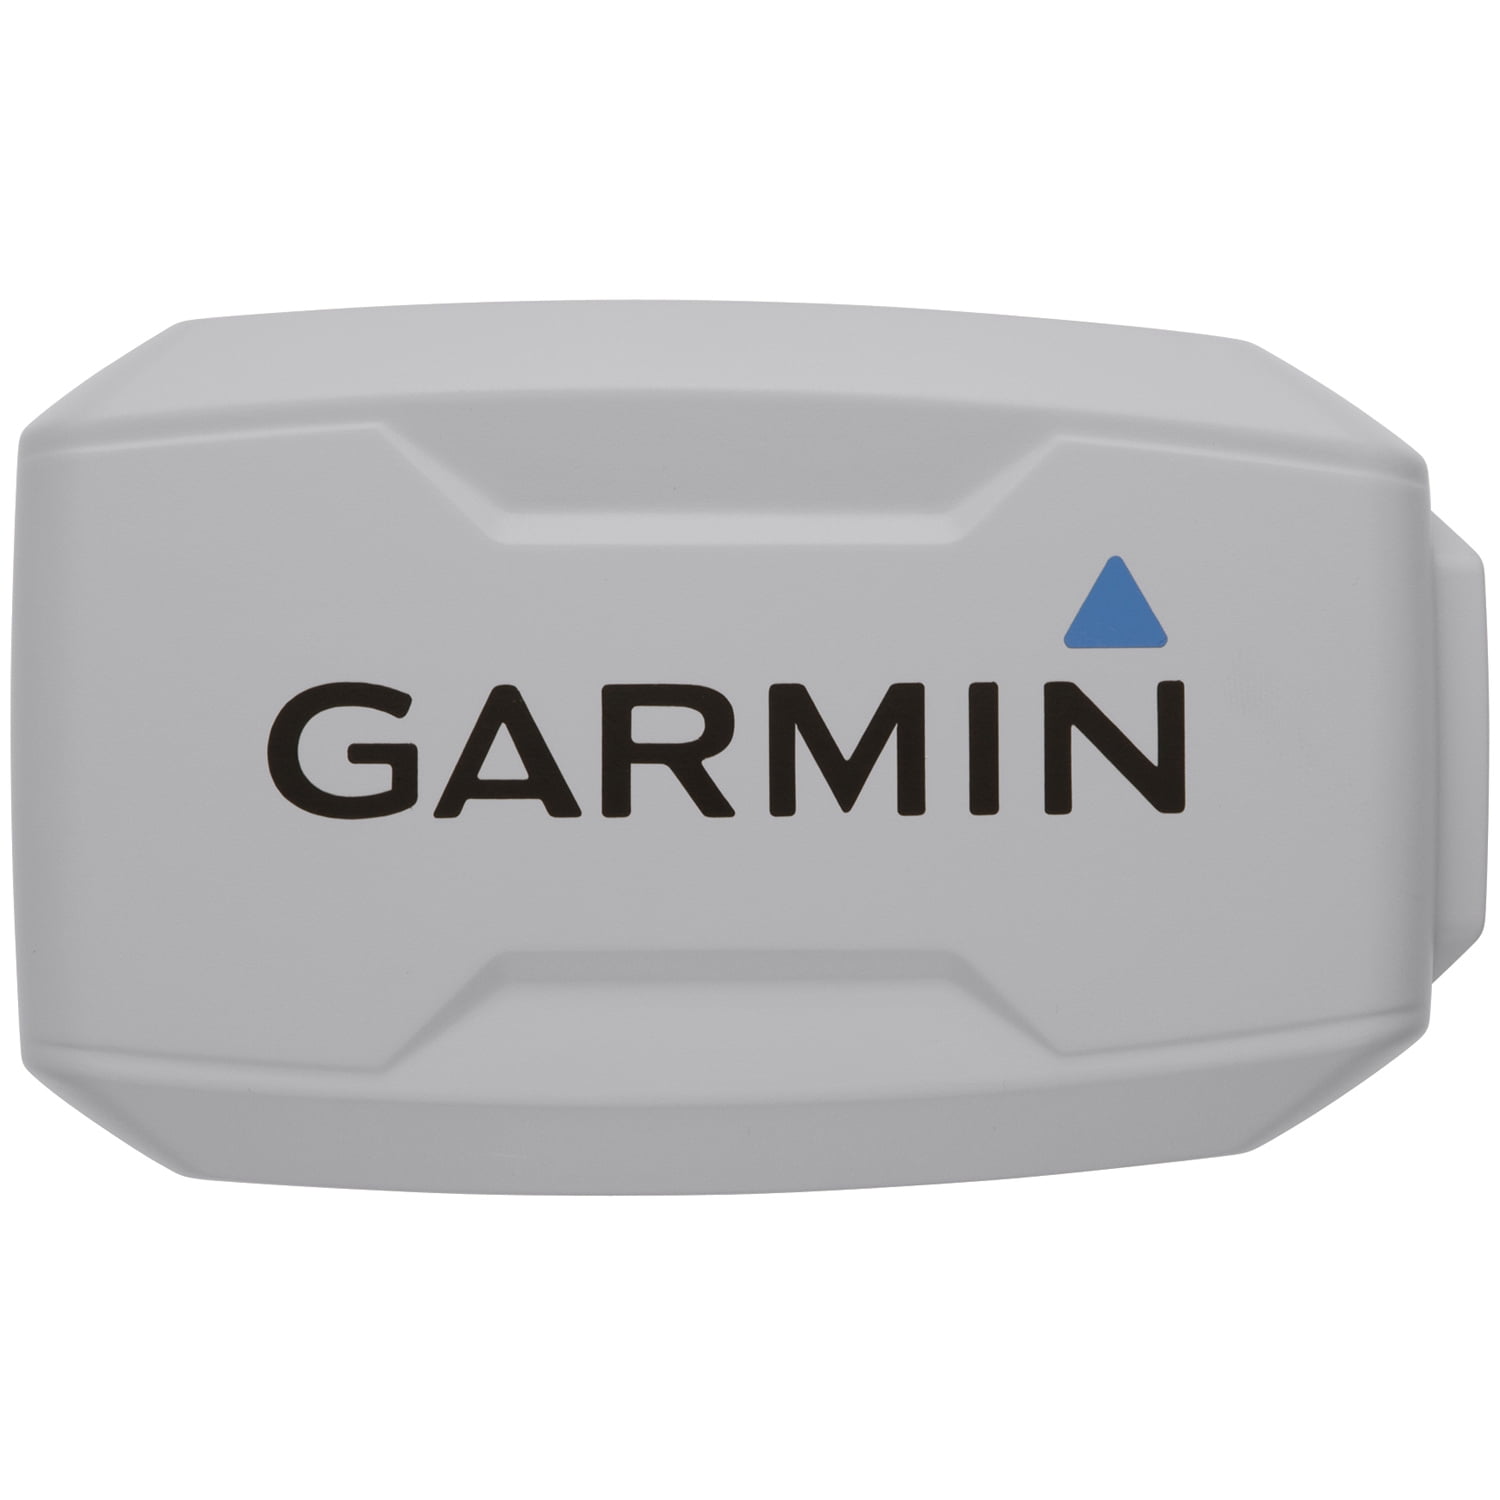 Garmin STRIKER 4 Portable Bundle 3.5" CHIRP Fishfinder W/ GPS & Kit 010-01550-10 